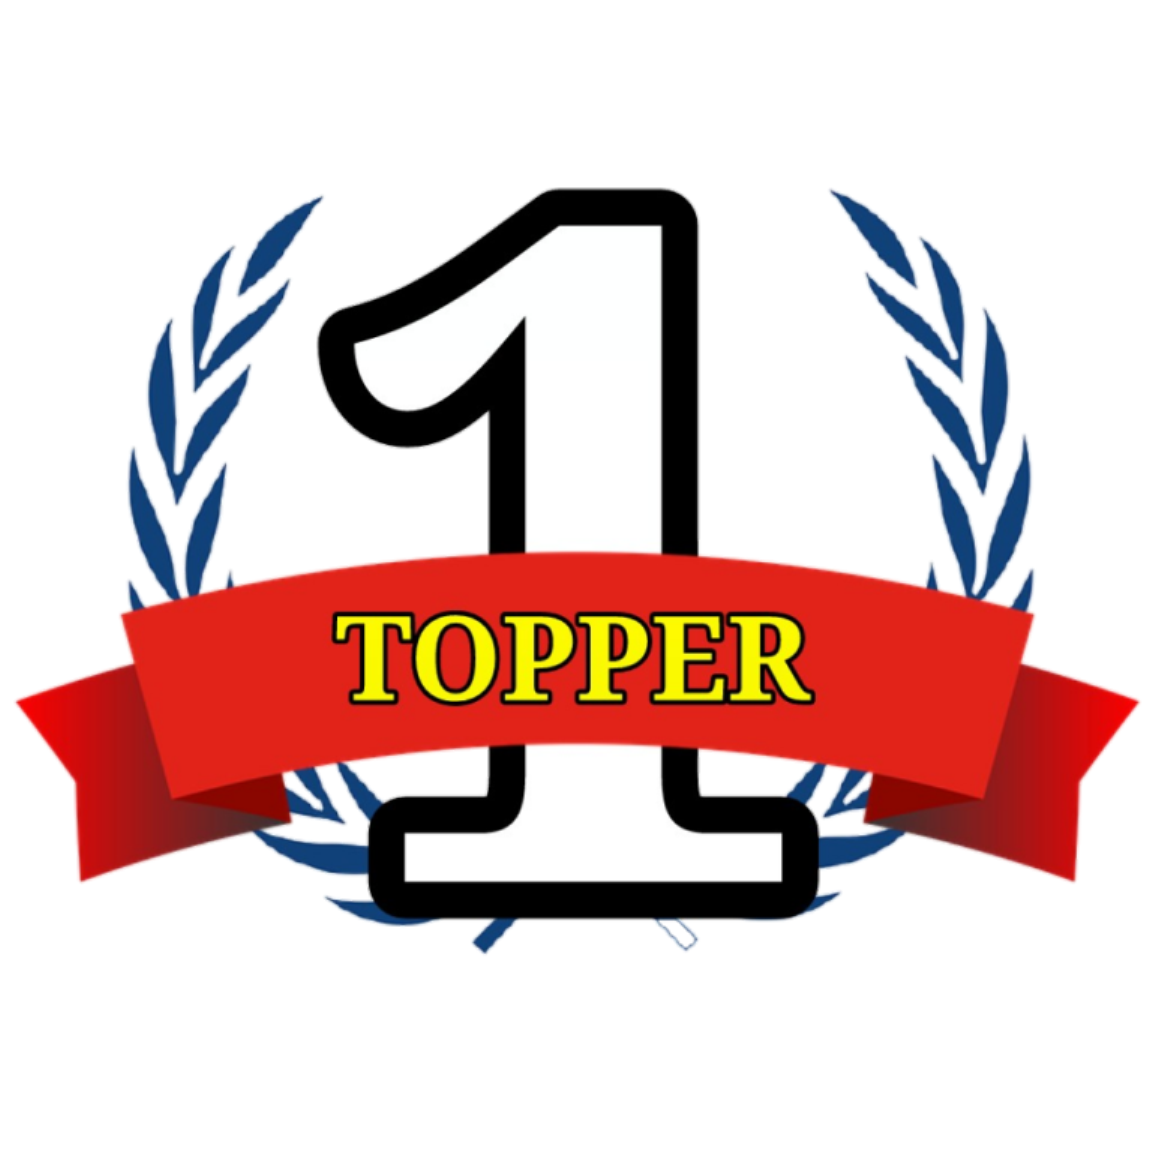 1 TOPPER